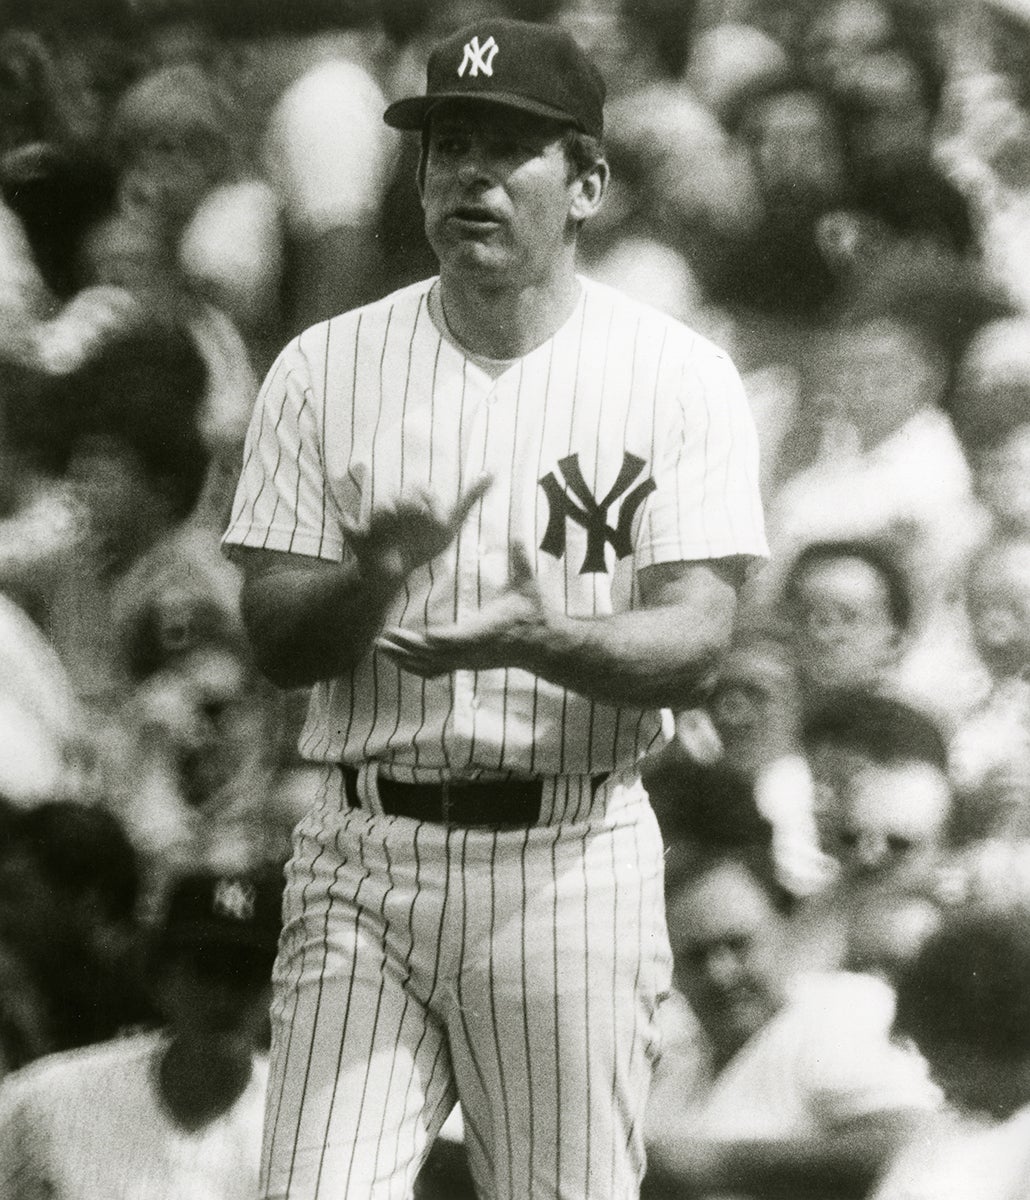 Bobby Cox in Yankees uniform